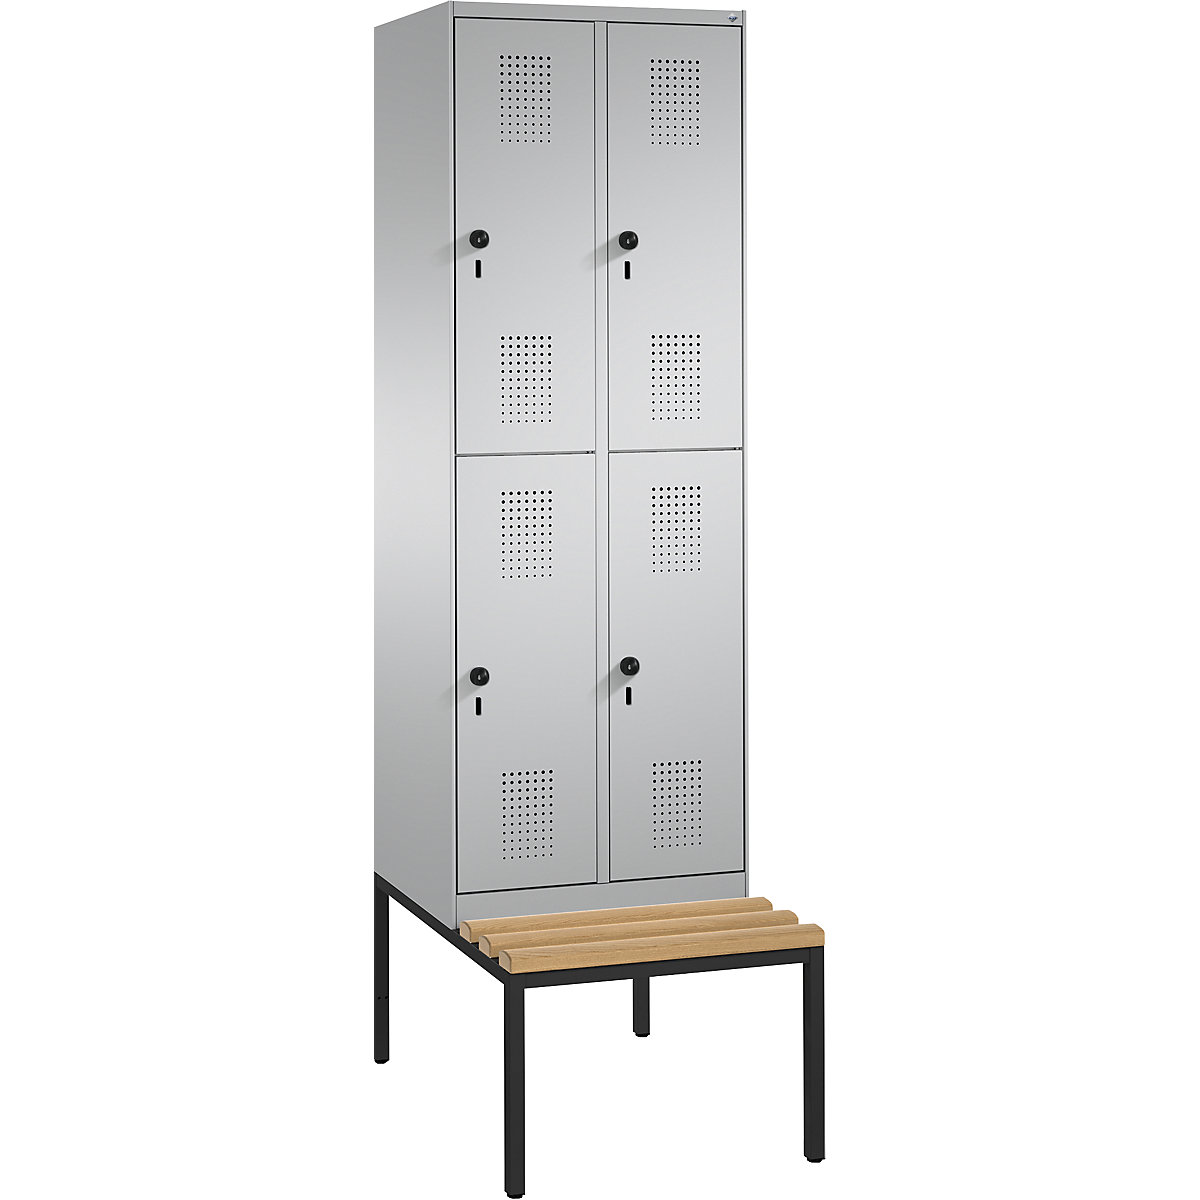 EVOLO cloakroom locker, double tier, with bench – C+P, 2 compartments, 2 shelf compartments each, compartment width 300 mm, white aluminium / white aluminium-12